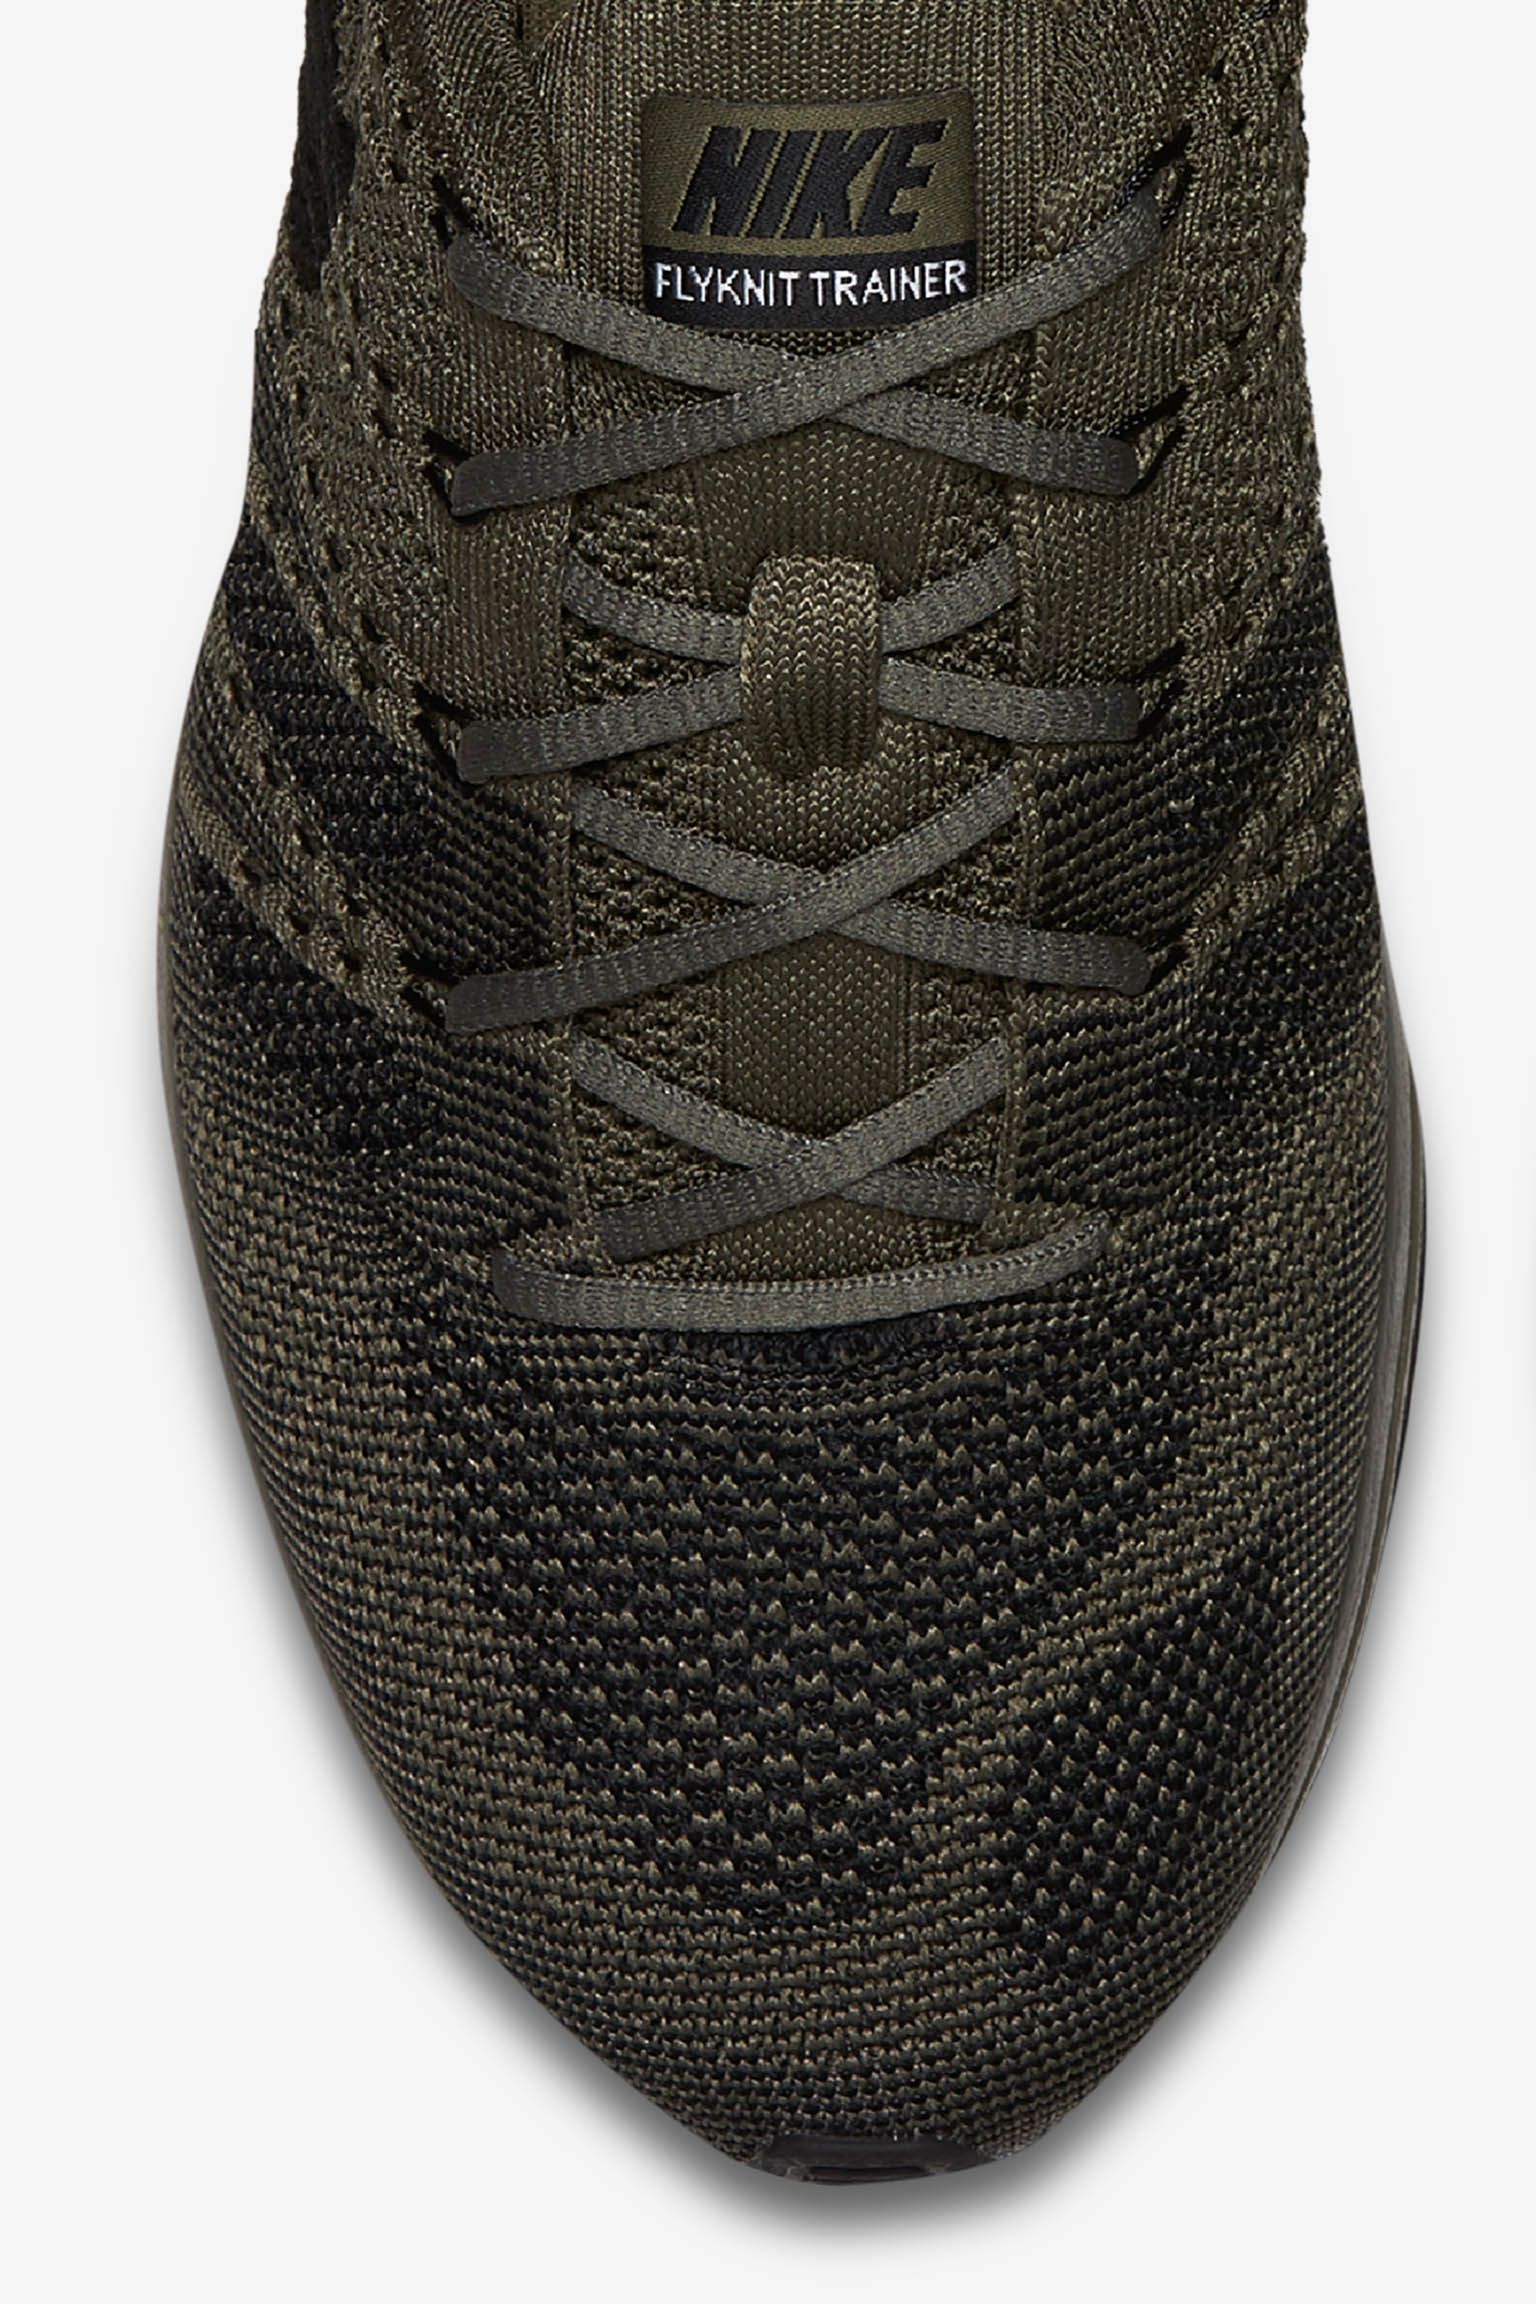 Fecha de lanzamiento de las Nike Flyknit Trainer "Light Olive &amp; Black". Nike SNKRS